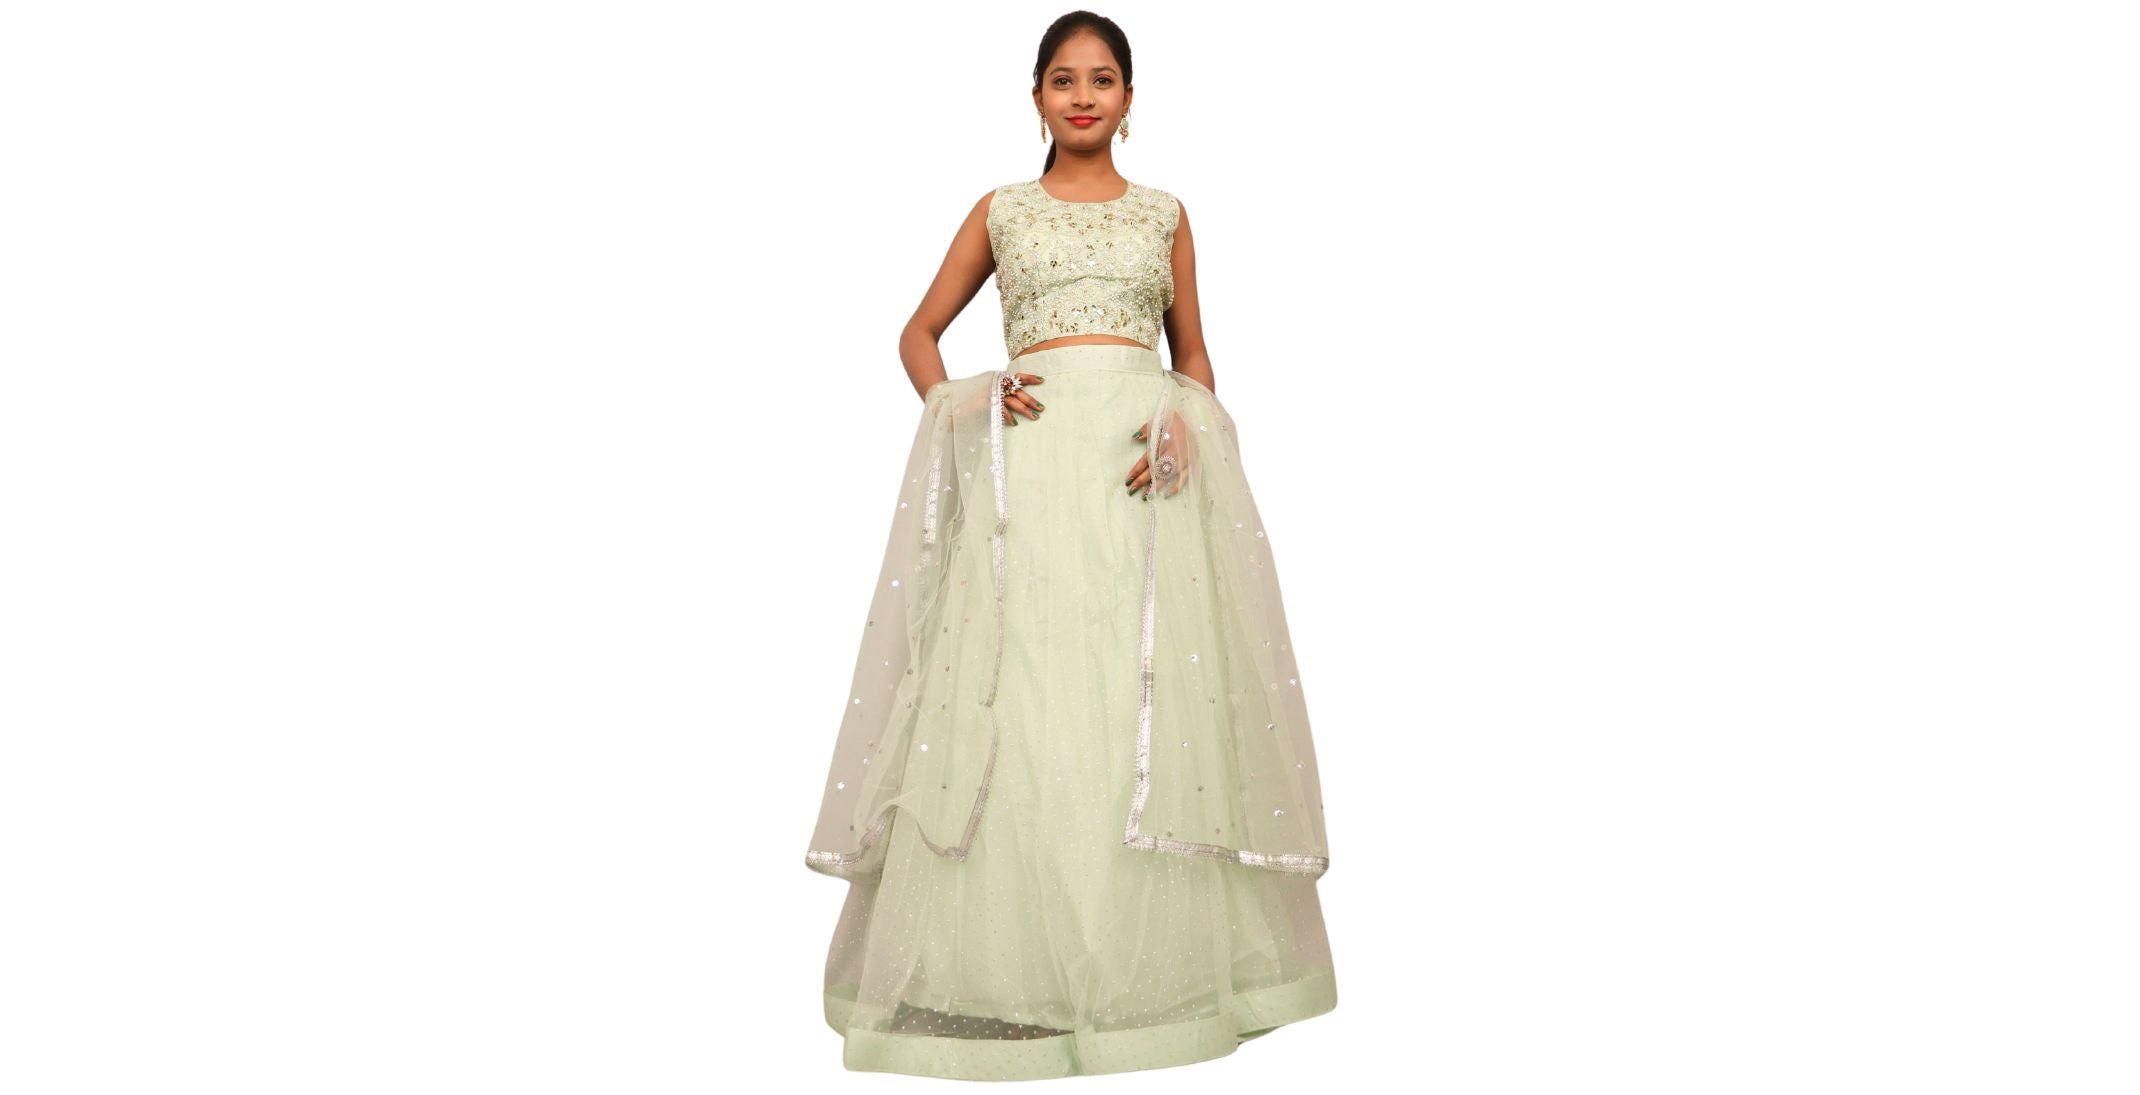  shreekama-designer-lehenga-chic-celebrations-bridesmaid-lehenga-trends-by-shreekama